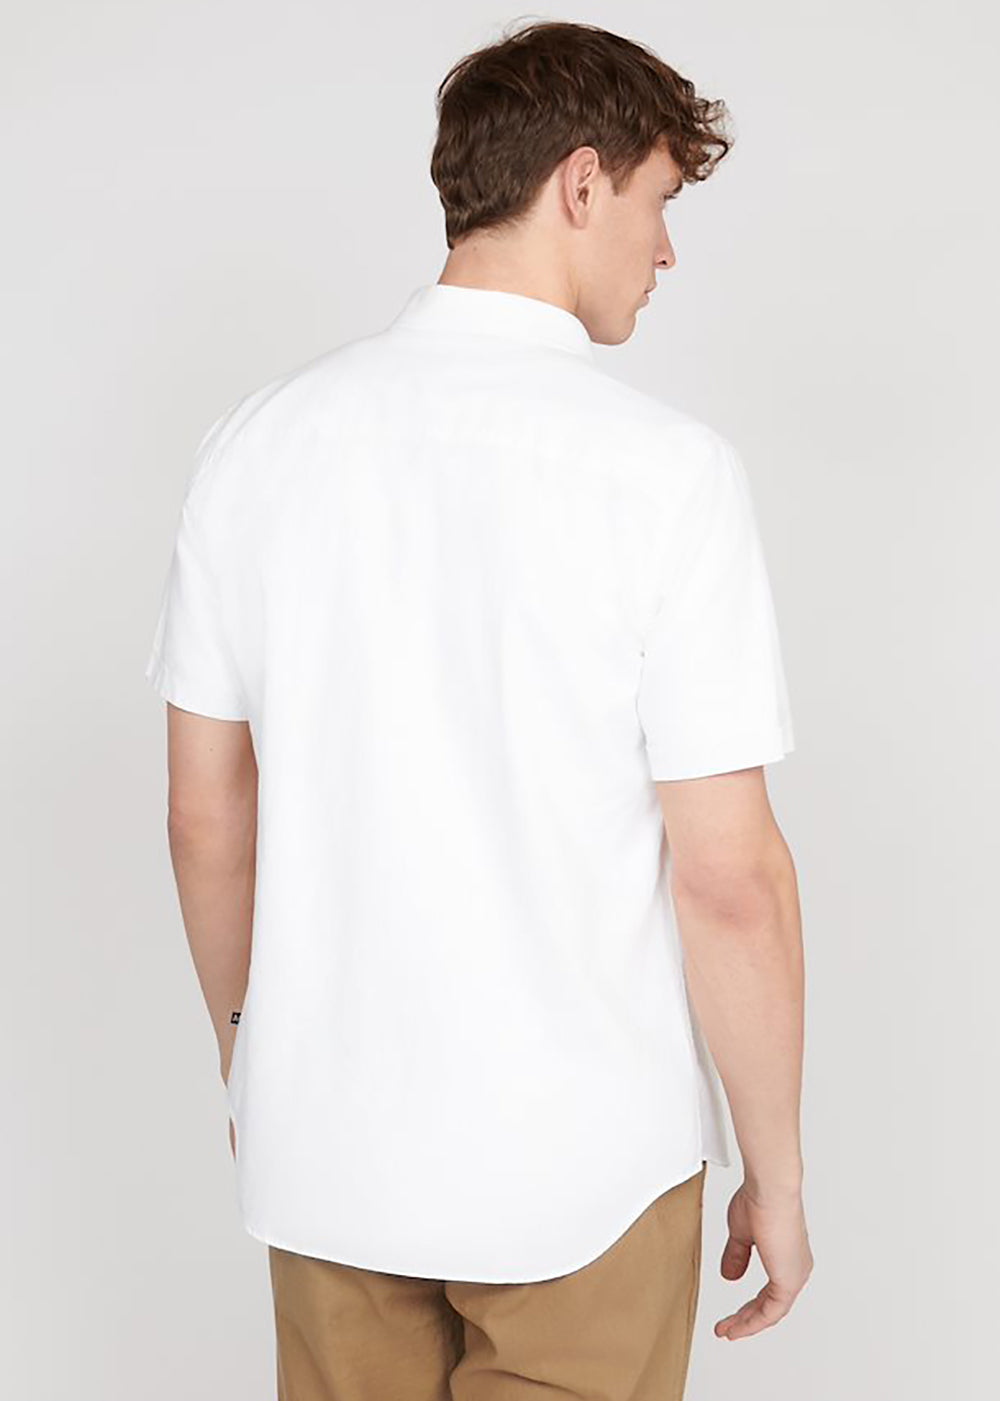 Trostol Button Down Short Sleeve Shirt - White - Matinique Canada - Danali